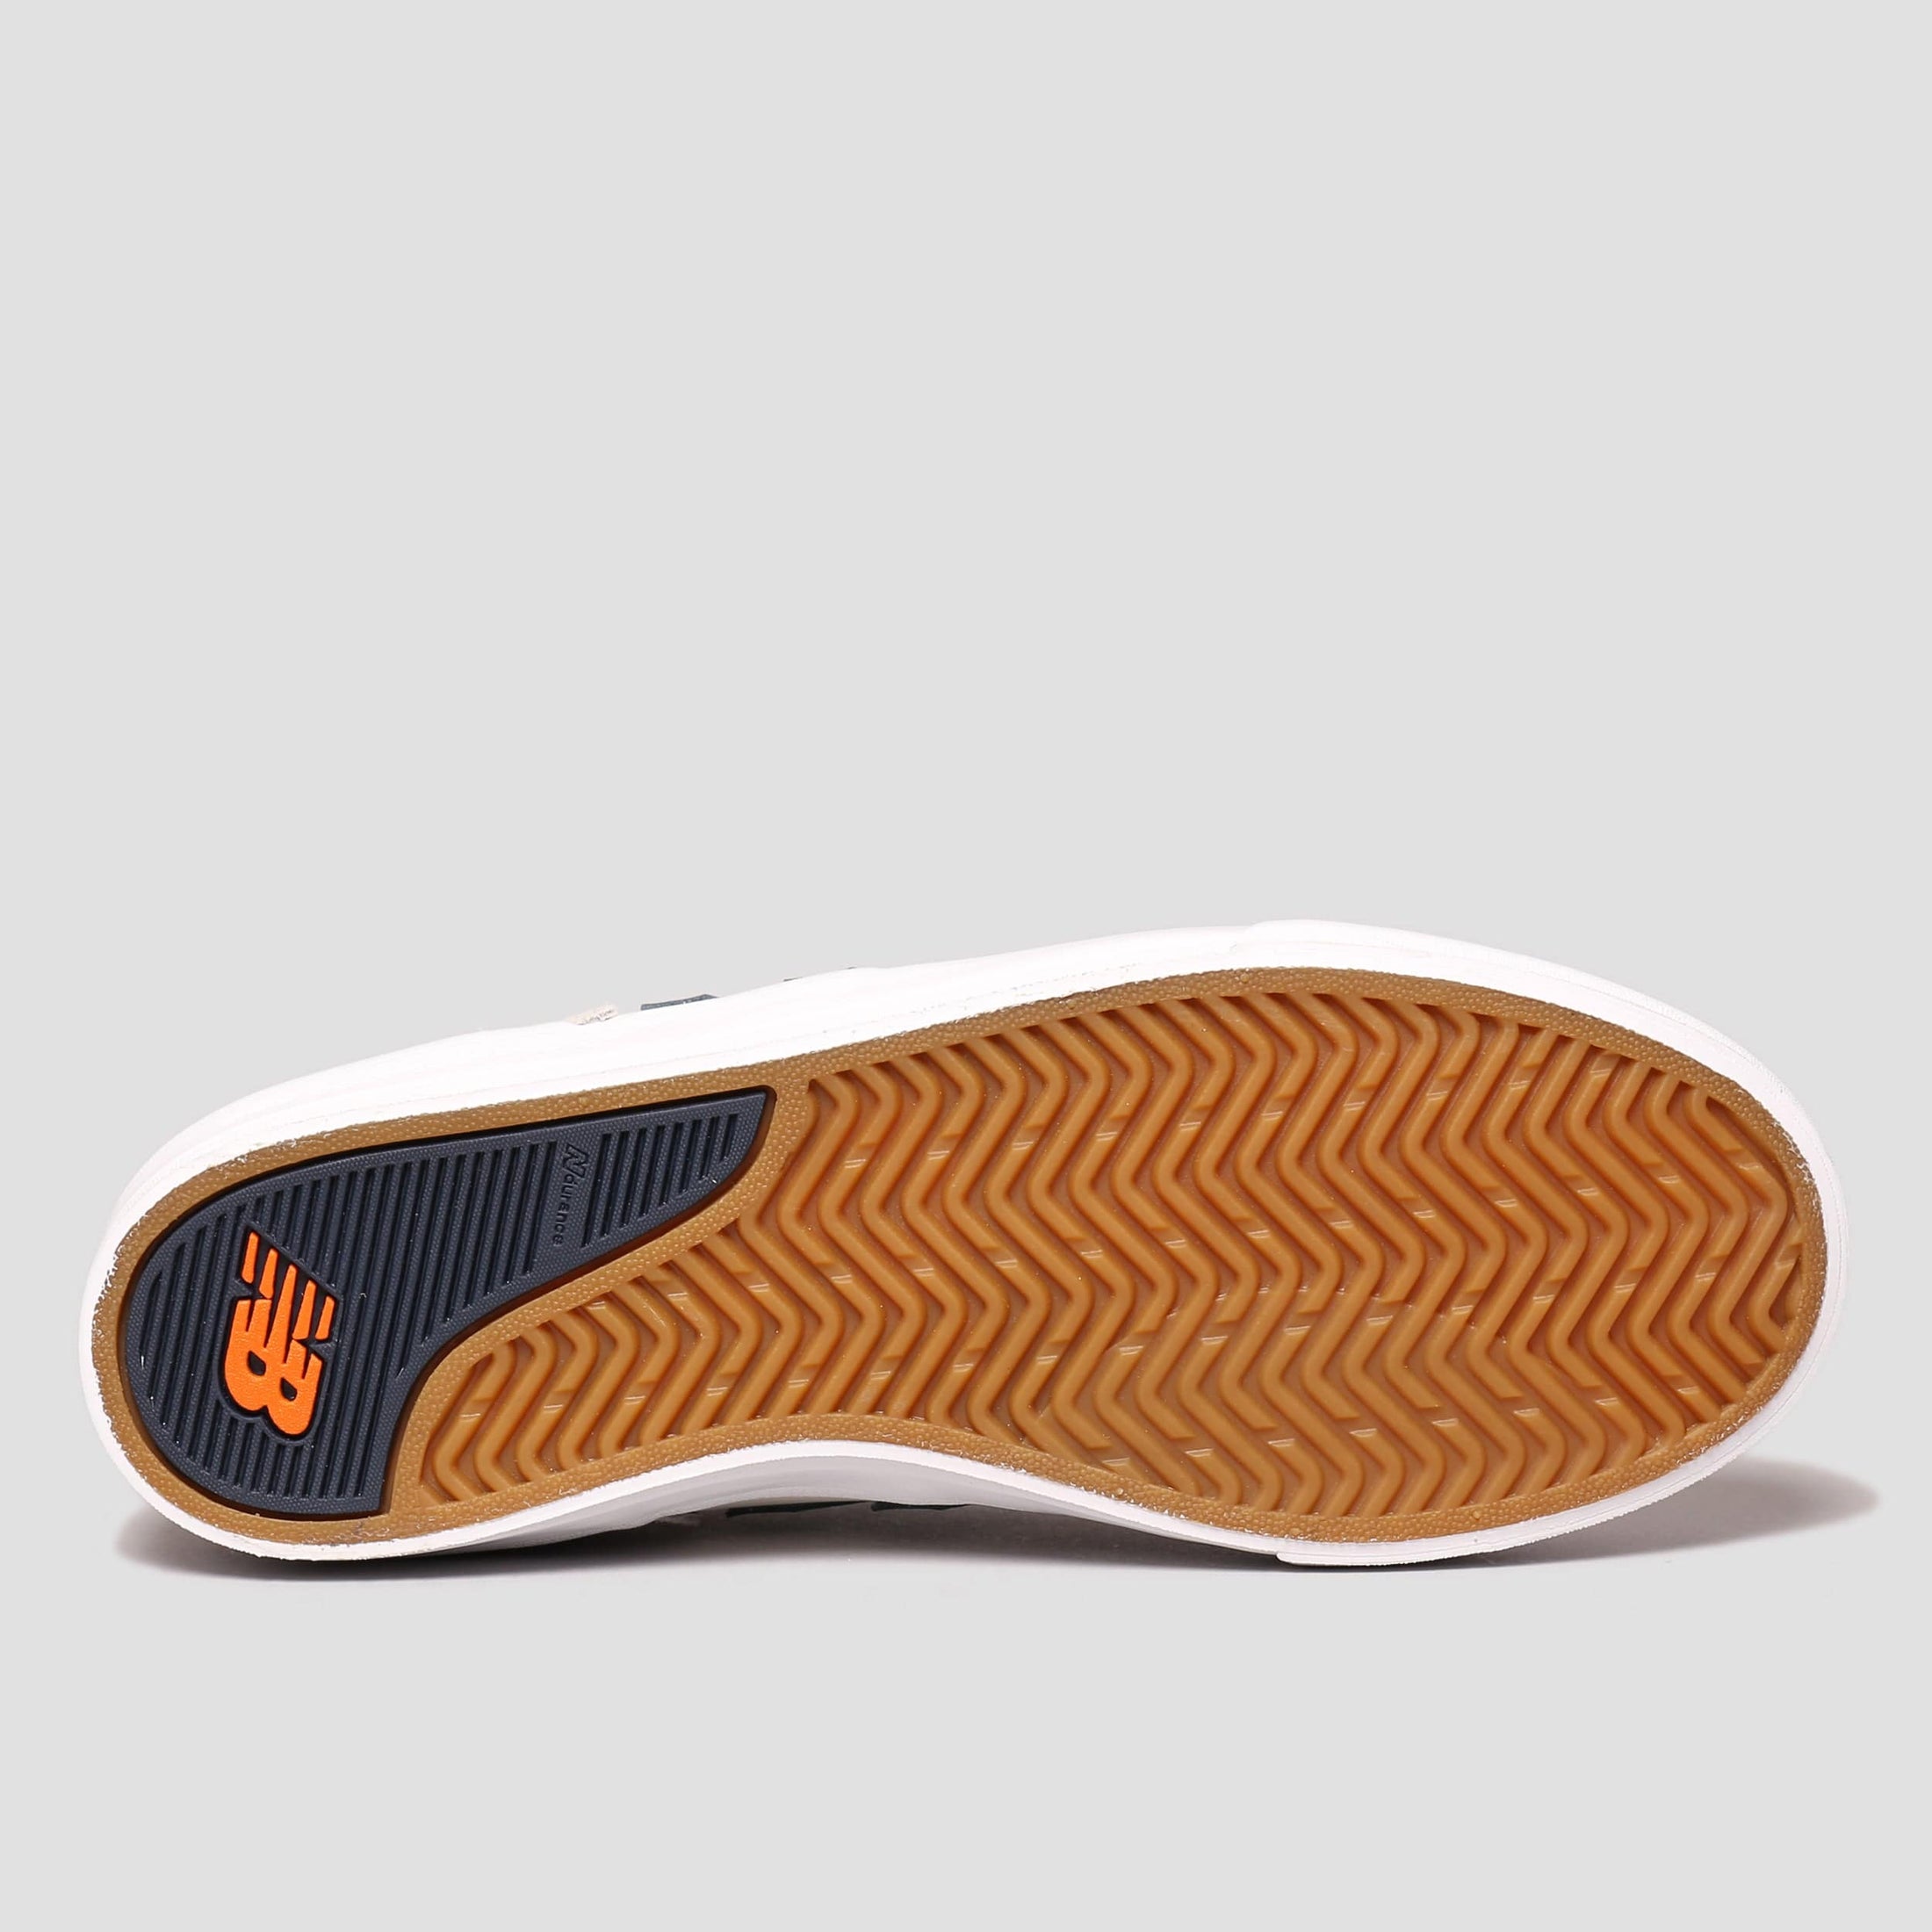 New Balance Jamie Foy 306 Skate Shoes Shoes Grey / White